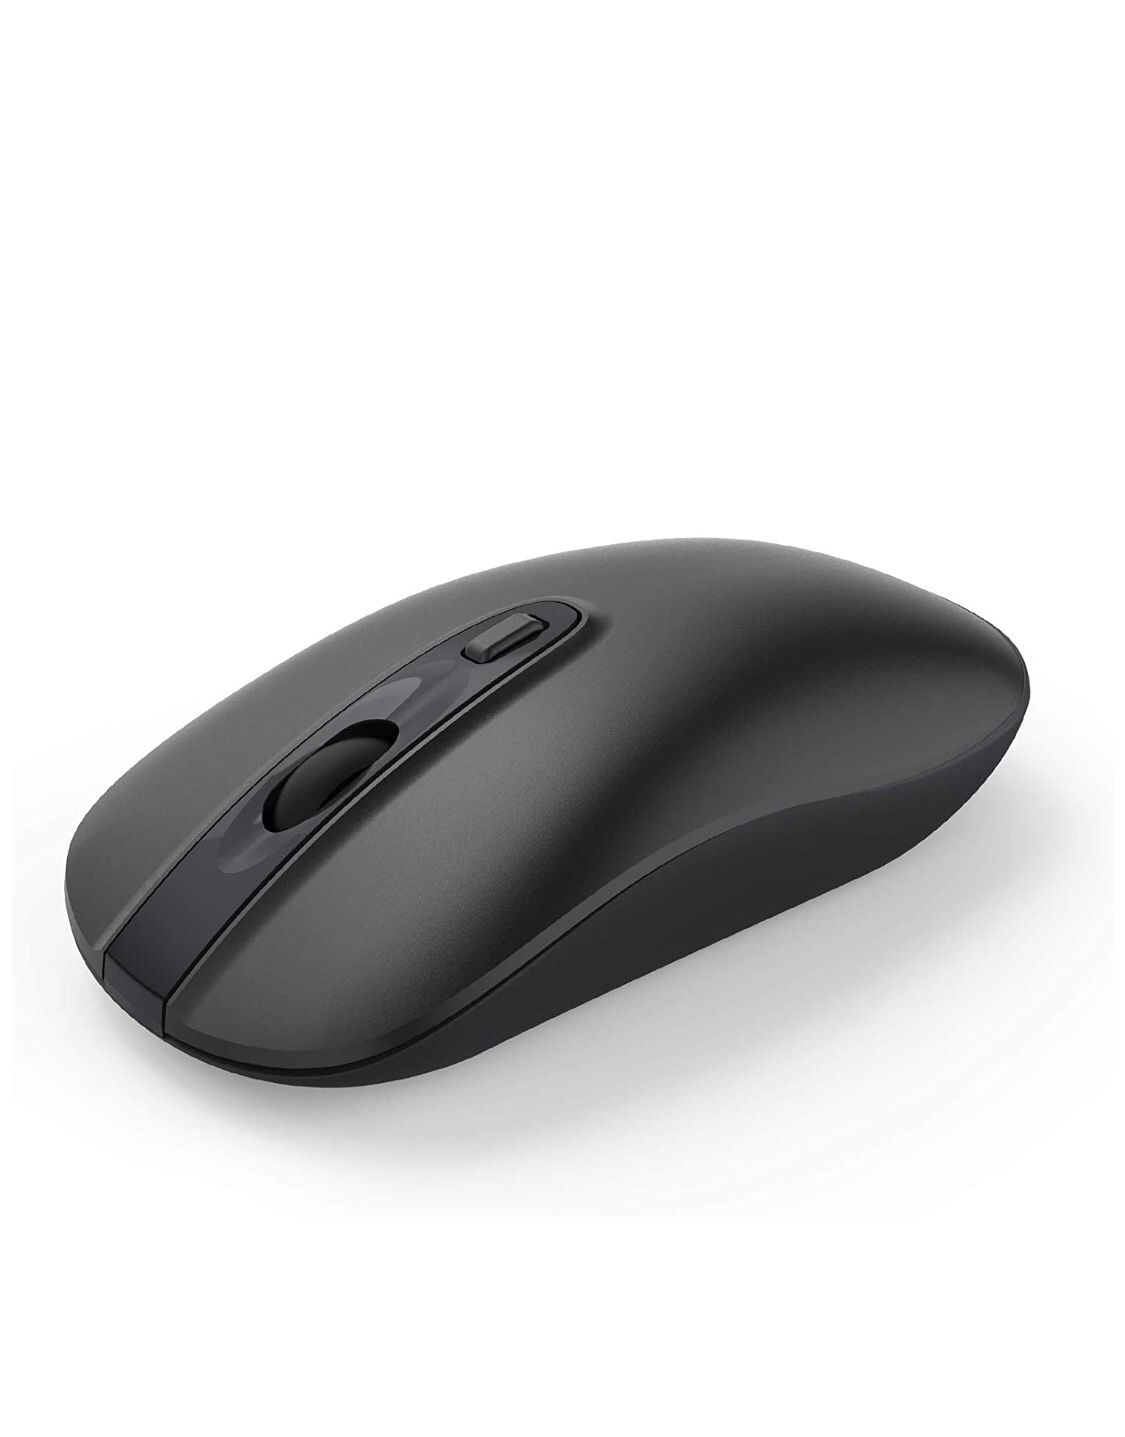 Wireless Computer Mouse, Cimetech 2.4G Slim Cordless Mouse Less Noise for Laptop Ergonomic Optical with Nano Receiver USB Mouse for Laptop, Deskbtop,